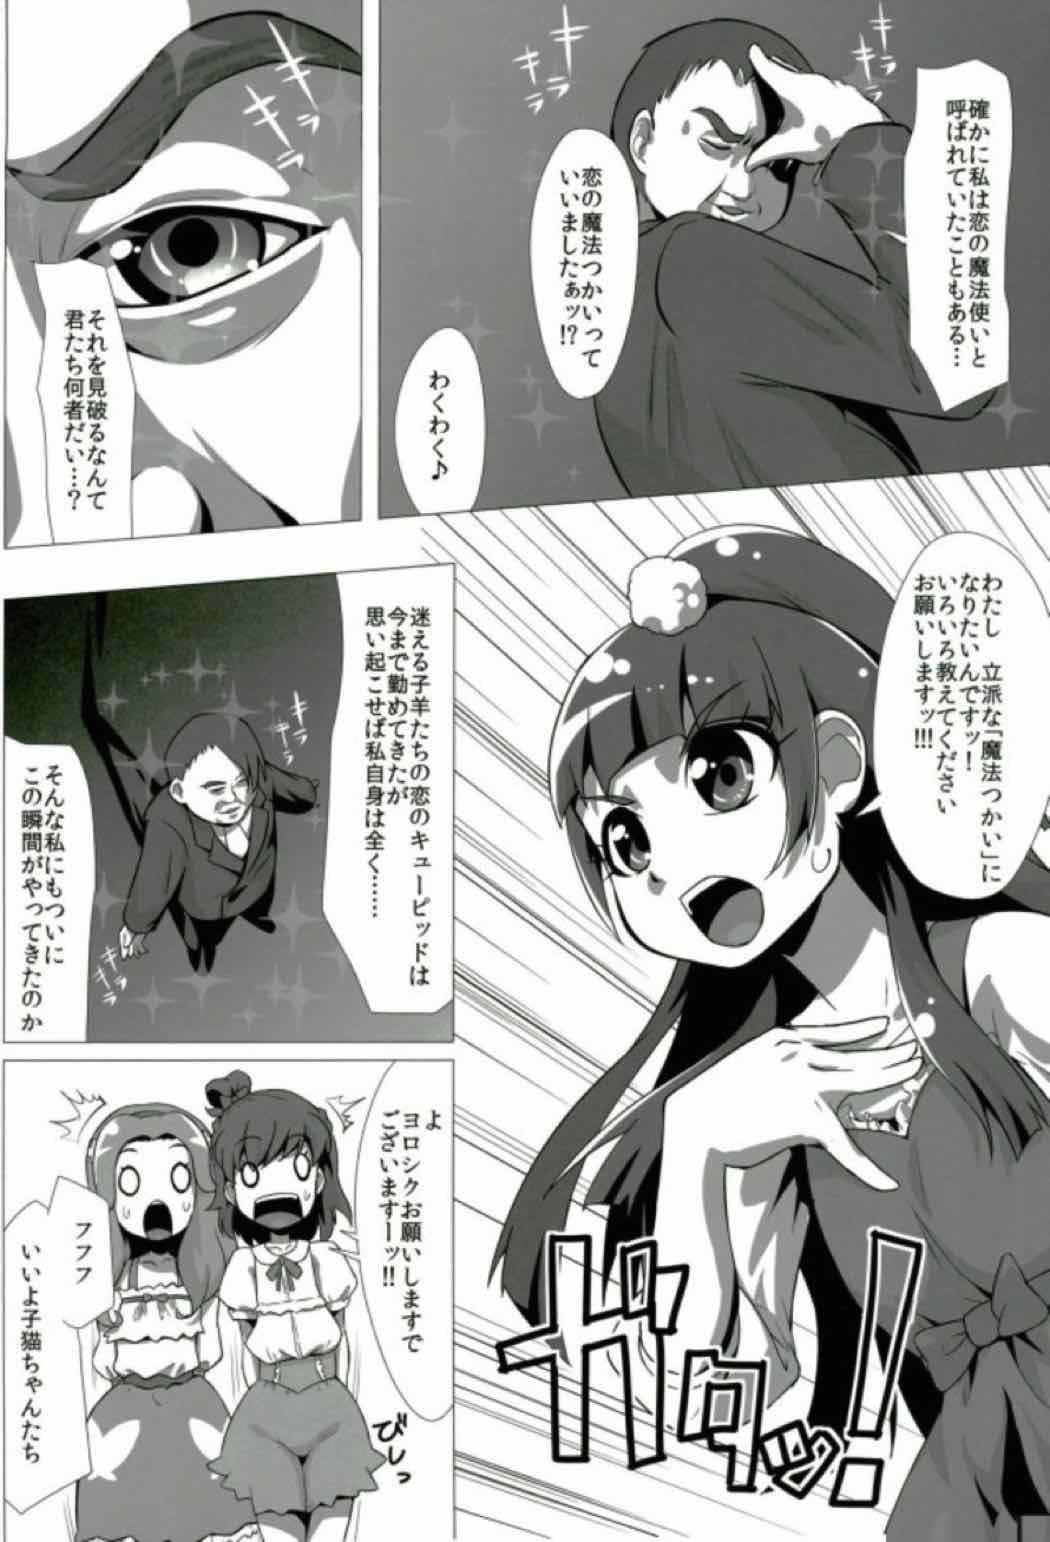 Van Nashimahoukai no Mahou Tsukai - Puella magi madoka magica Maho girls precure Innocent - Page 5